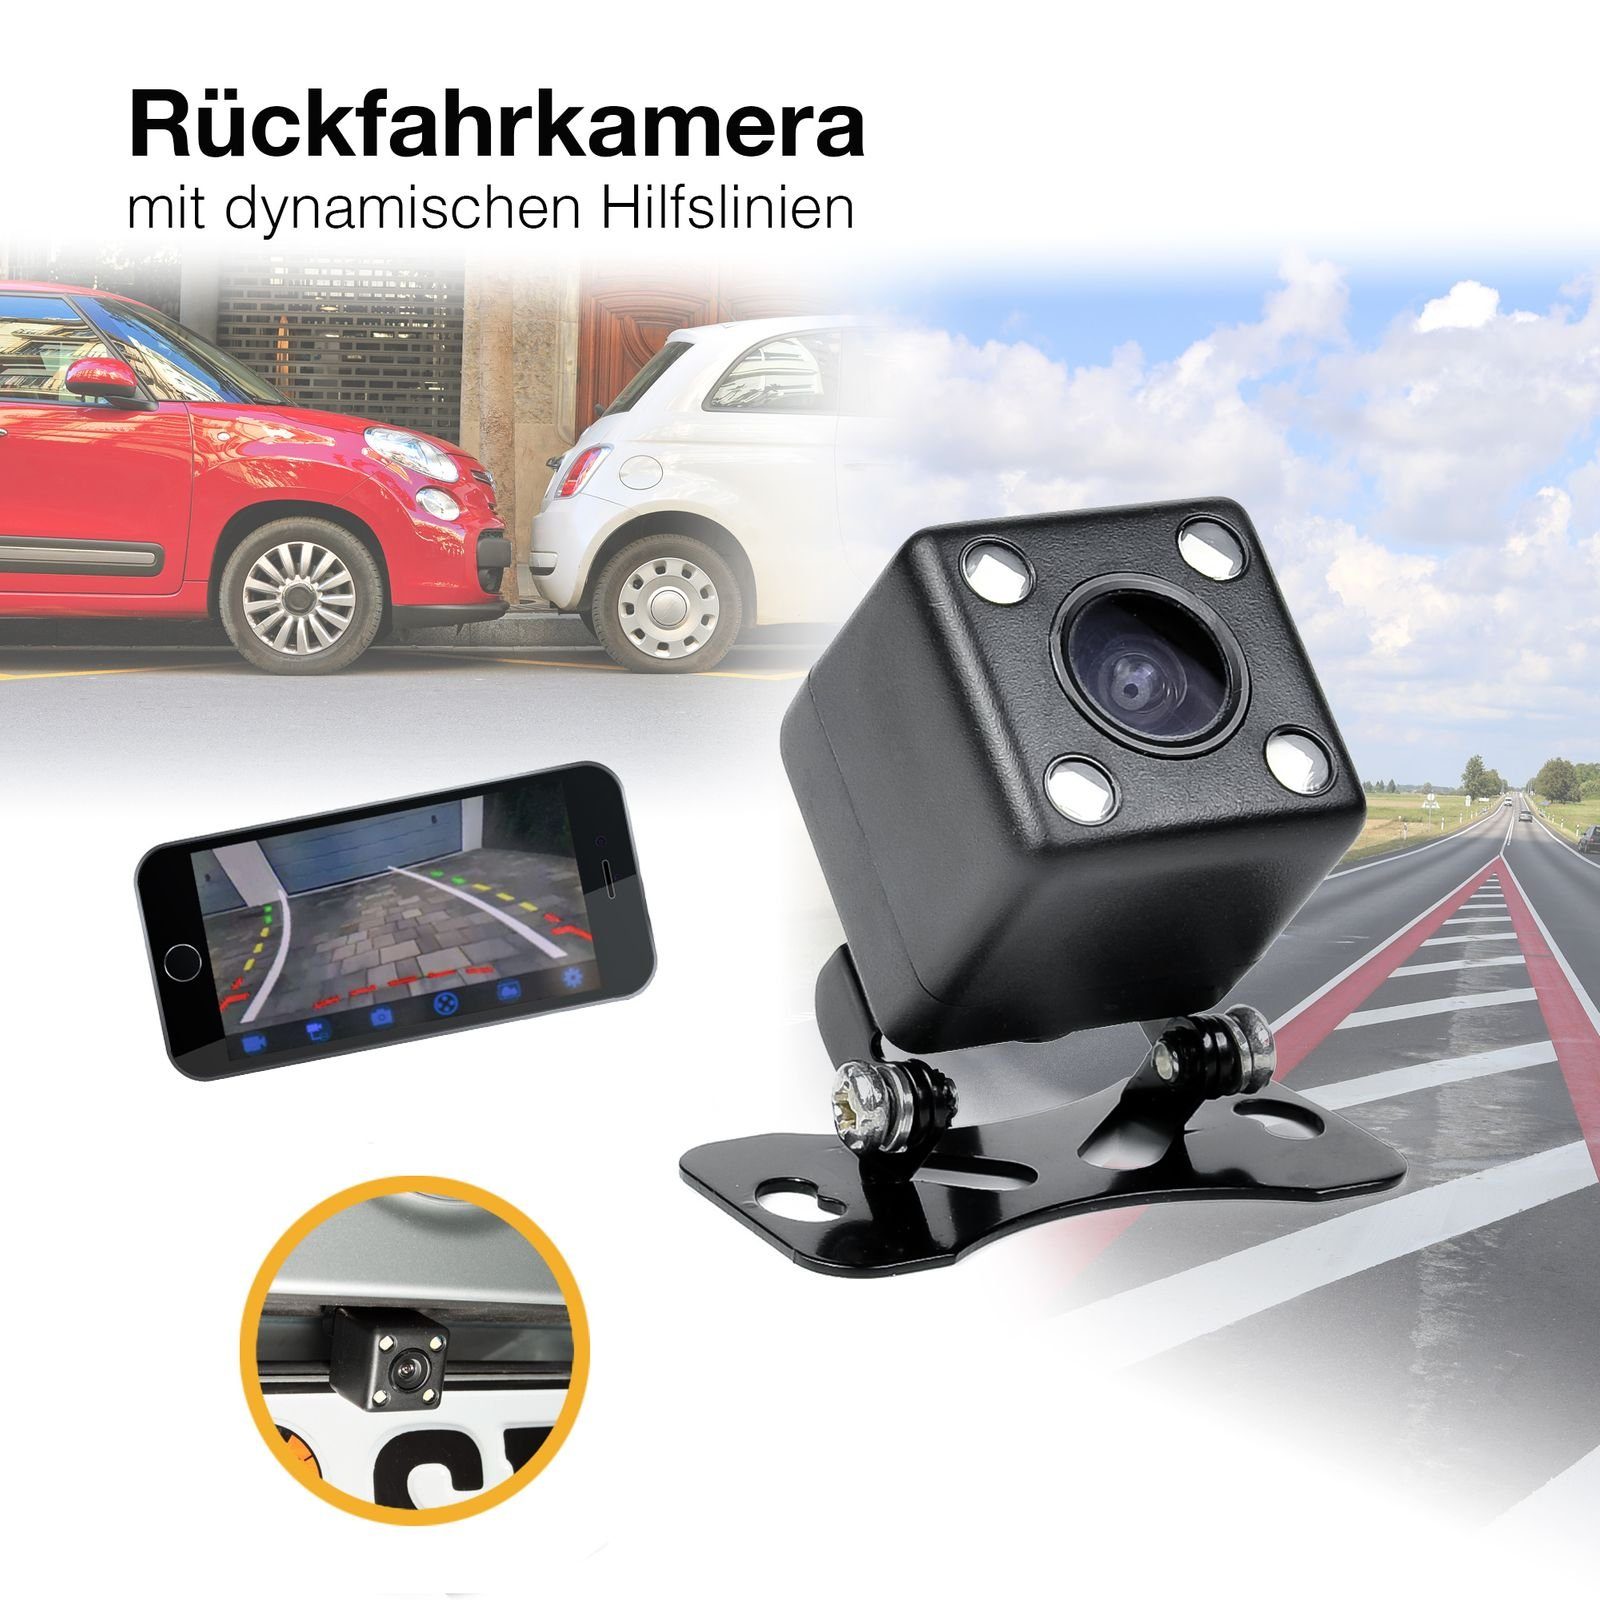 CARMATRIX CM-645 Rückfahrkamera (Auto Mini PKW, HD Kamera Unterbau Rückfahrkamera bewegliche Nachtischt, IR 170° PAL, Grad Parklinien Hilfslinien) dynamische